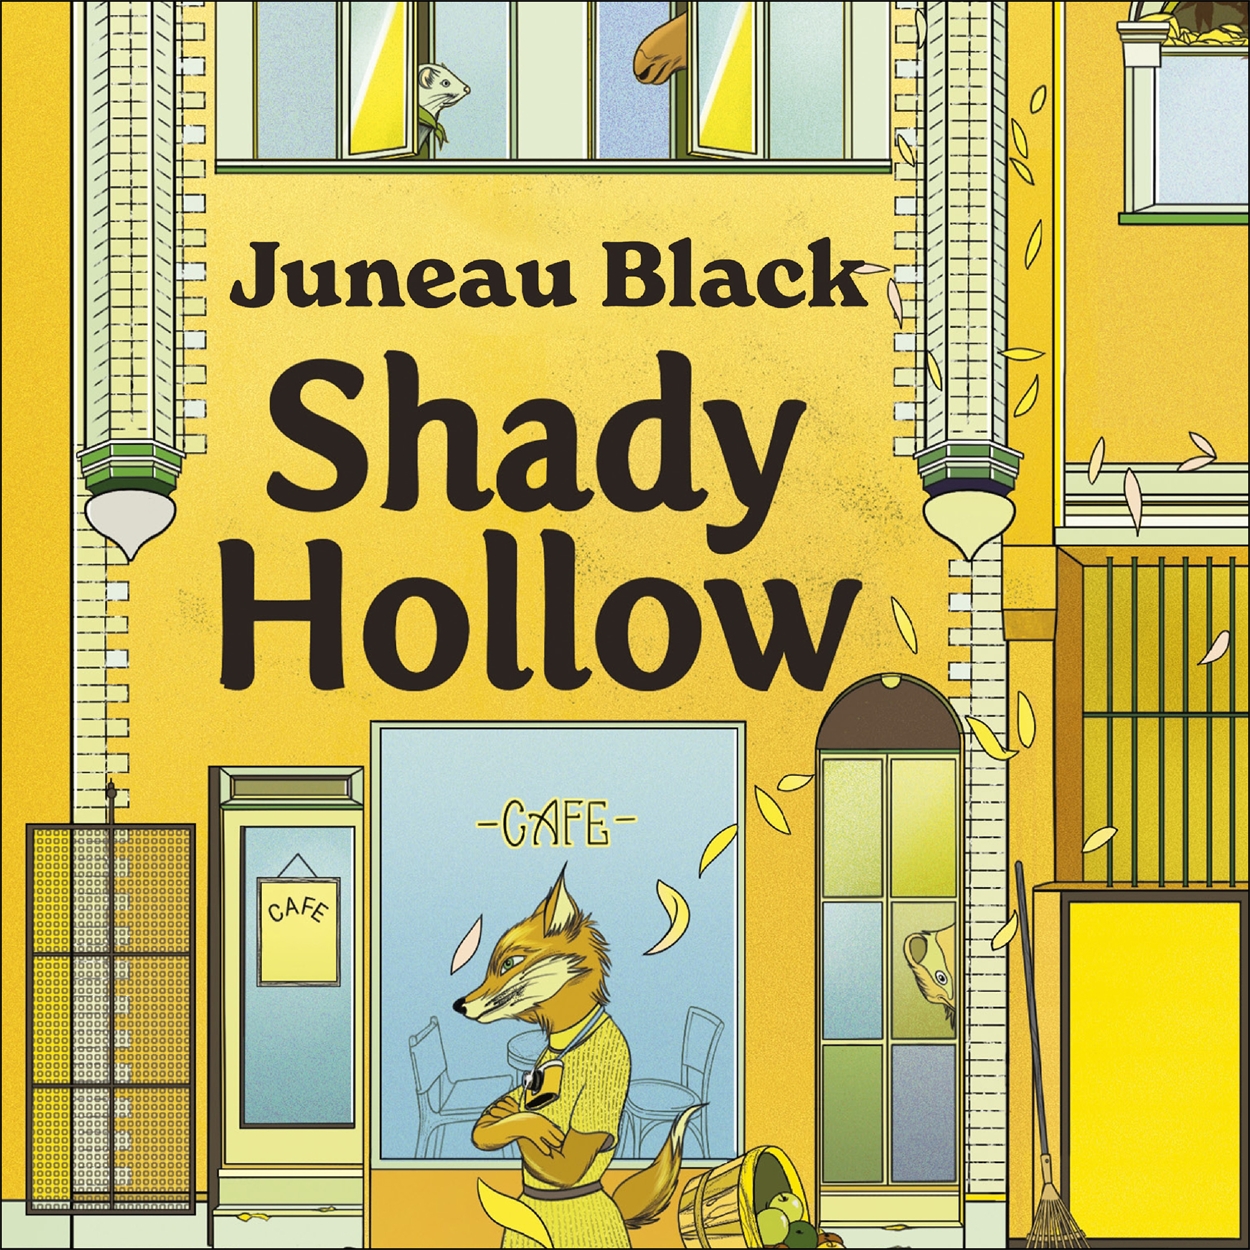 juneau black shady hollow